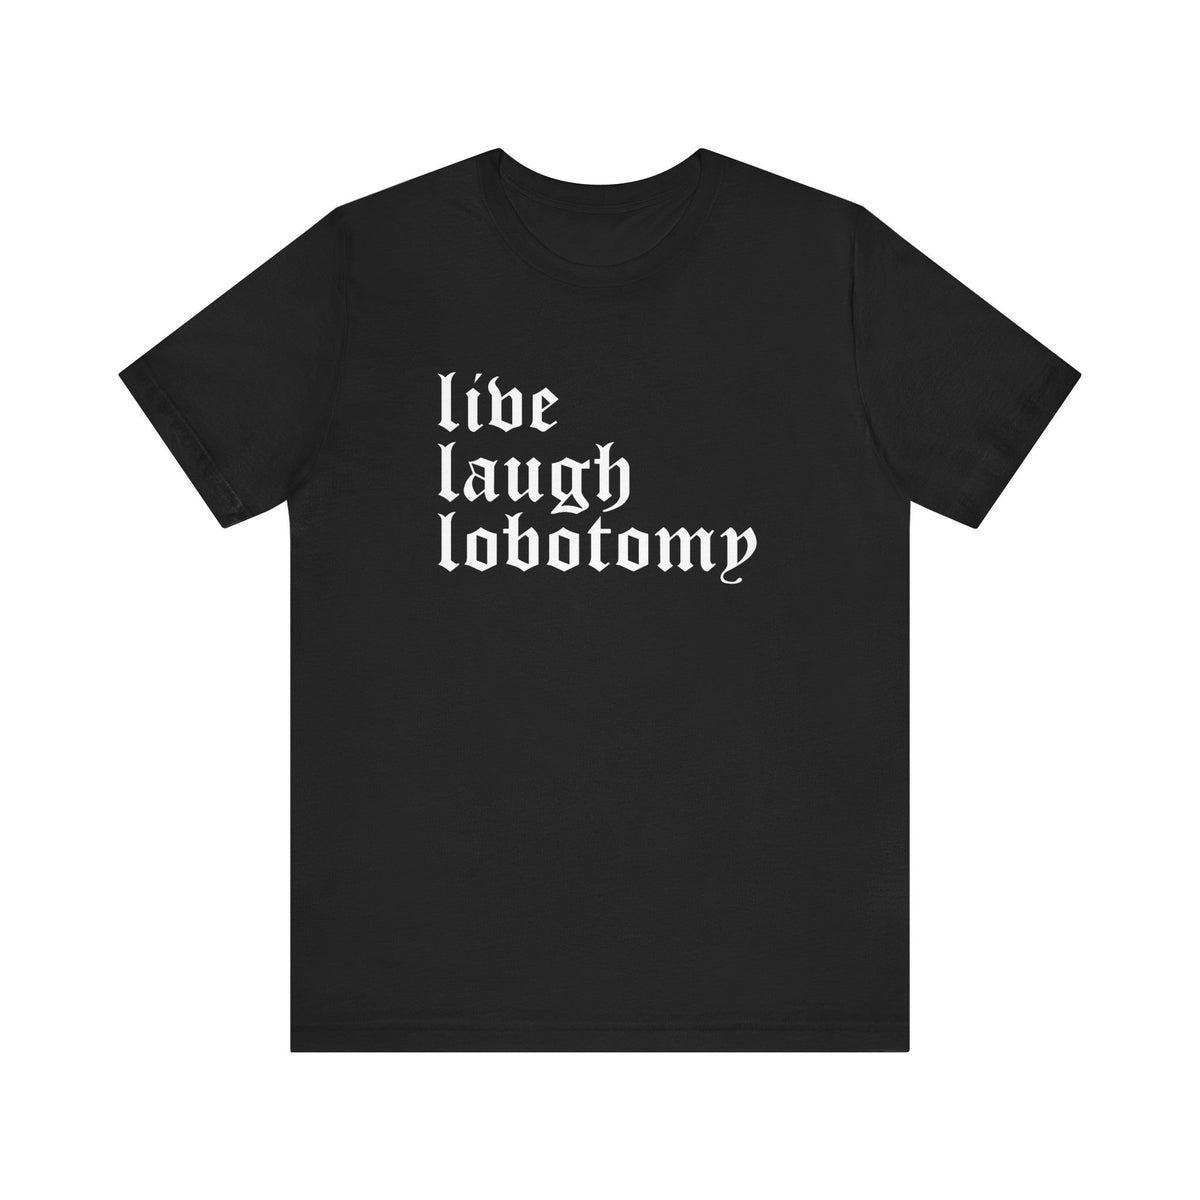 Live Laugh Lobotomy Short Sleeve Tee - Goth Cloth Co.T - Shirt28532502445088815878